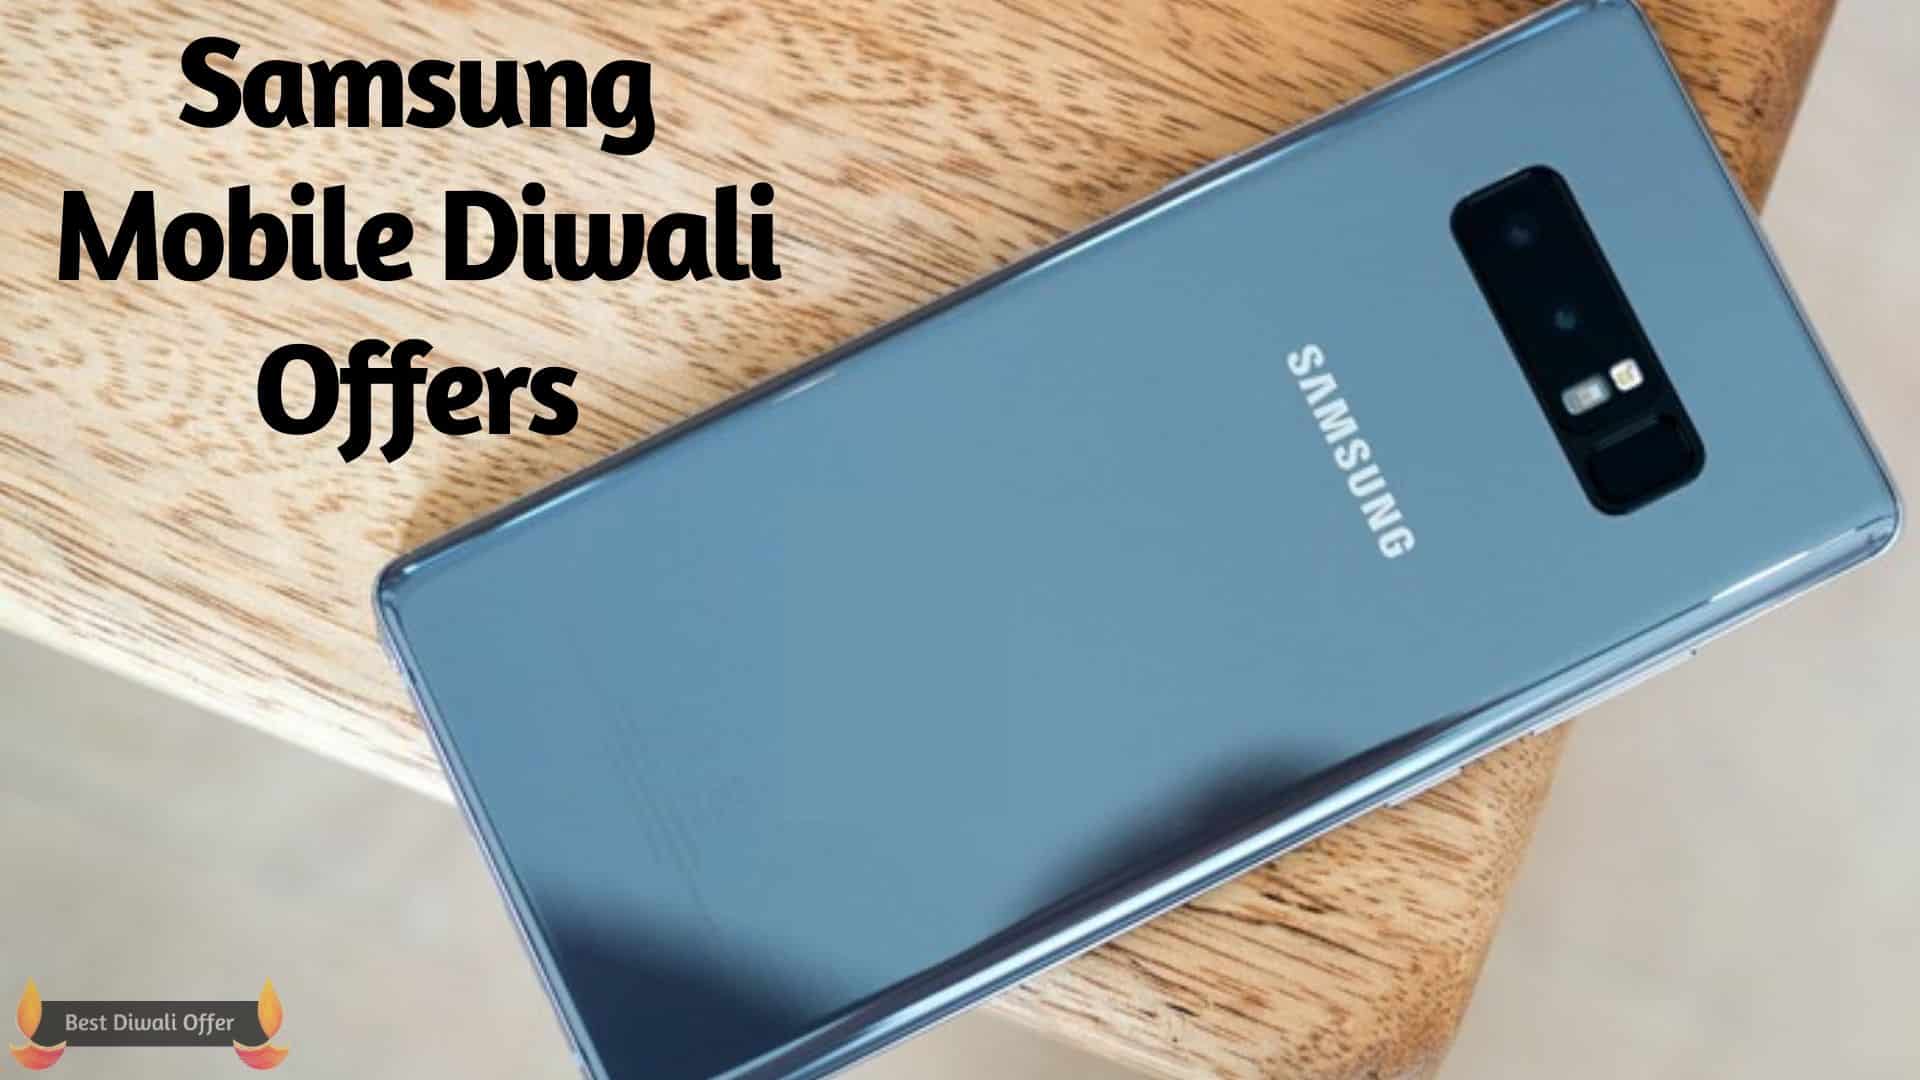 Samsung Mobile Diwali Offers